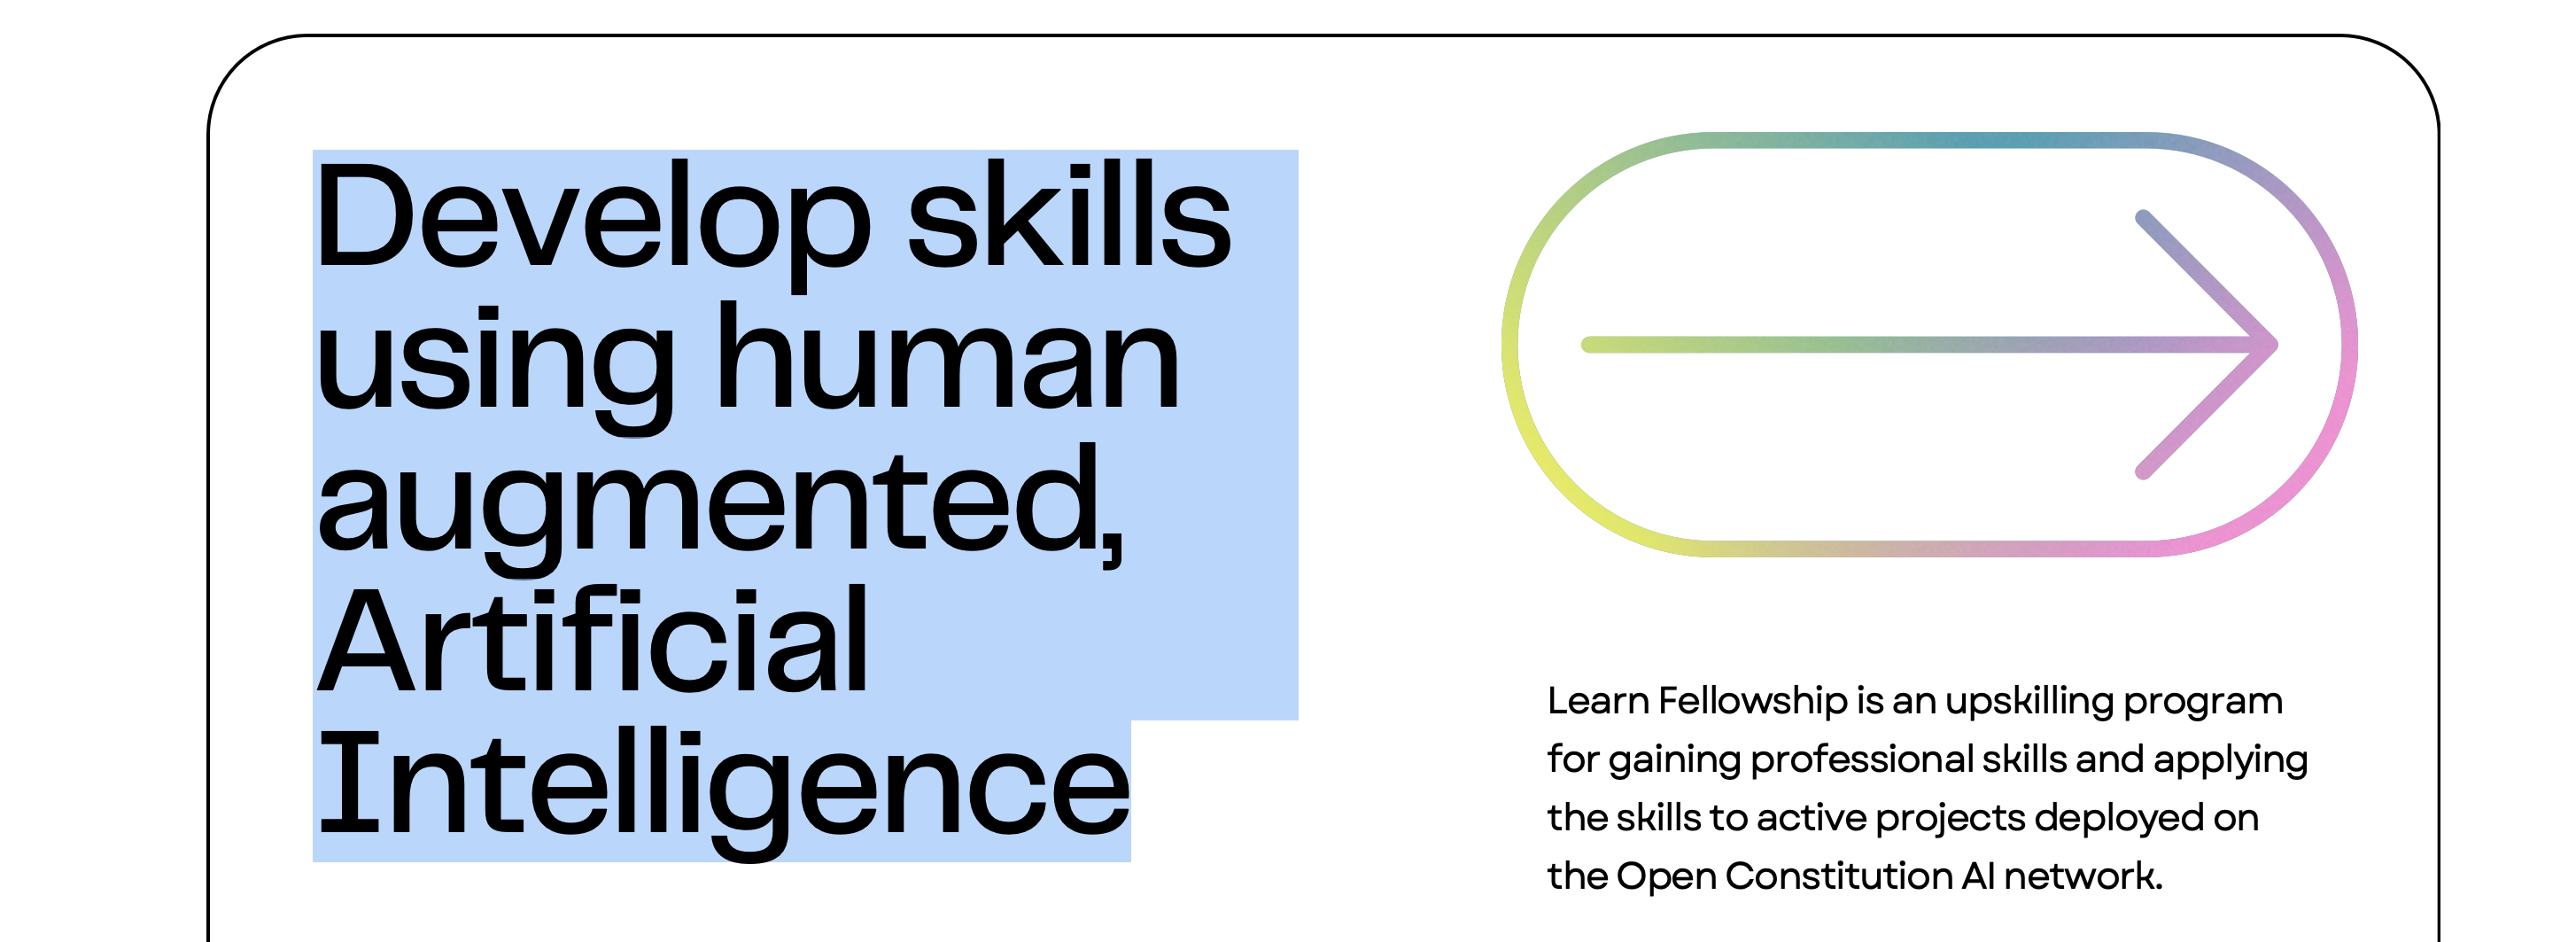 Learn Fellowship, a global upskilling program